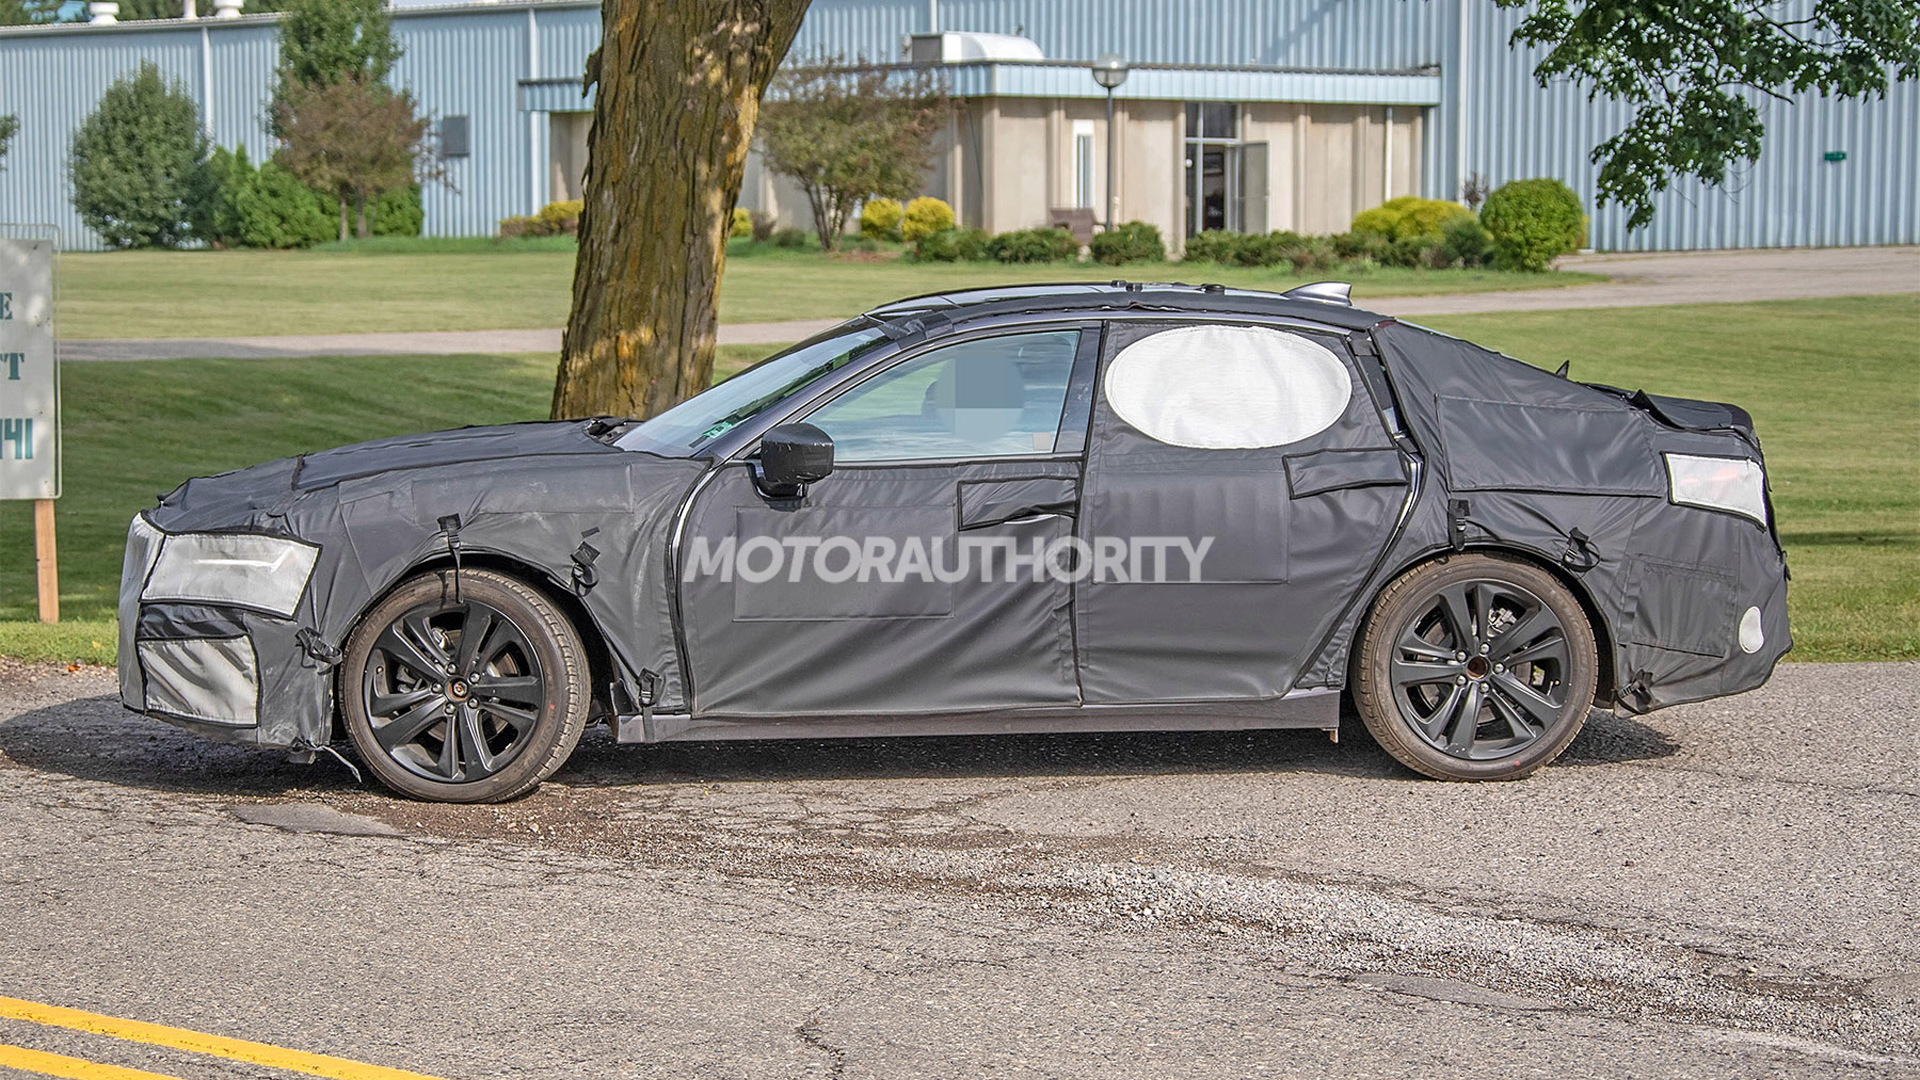 2021 Acura TLX spy shots - Photo credit: S. Baldauf/SB-Medien